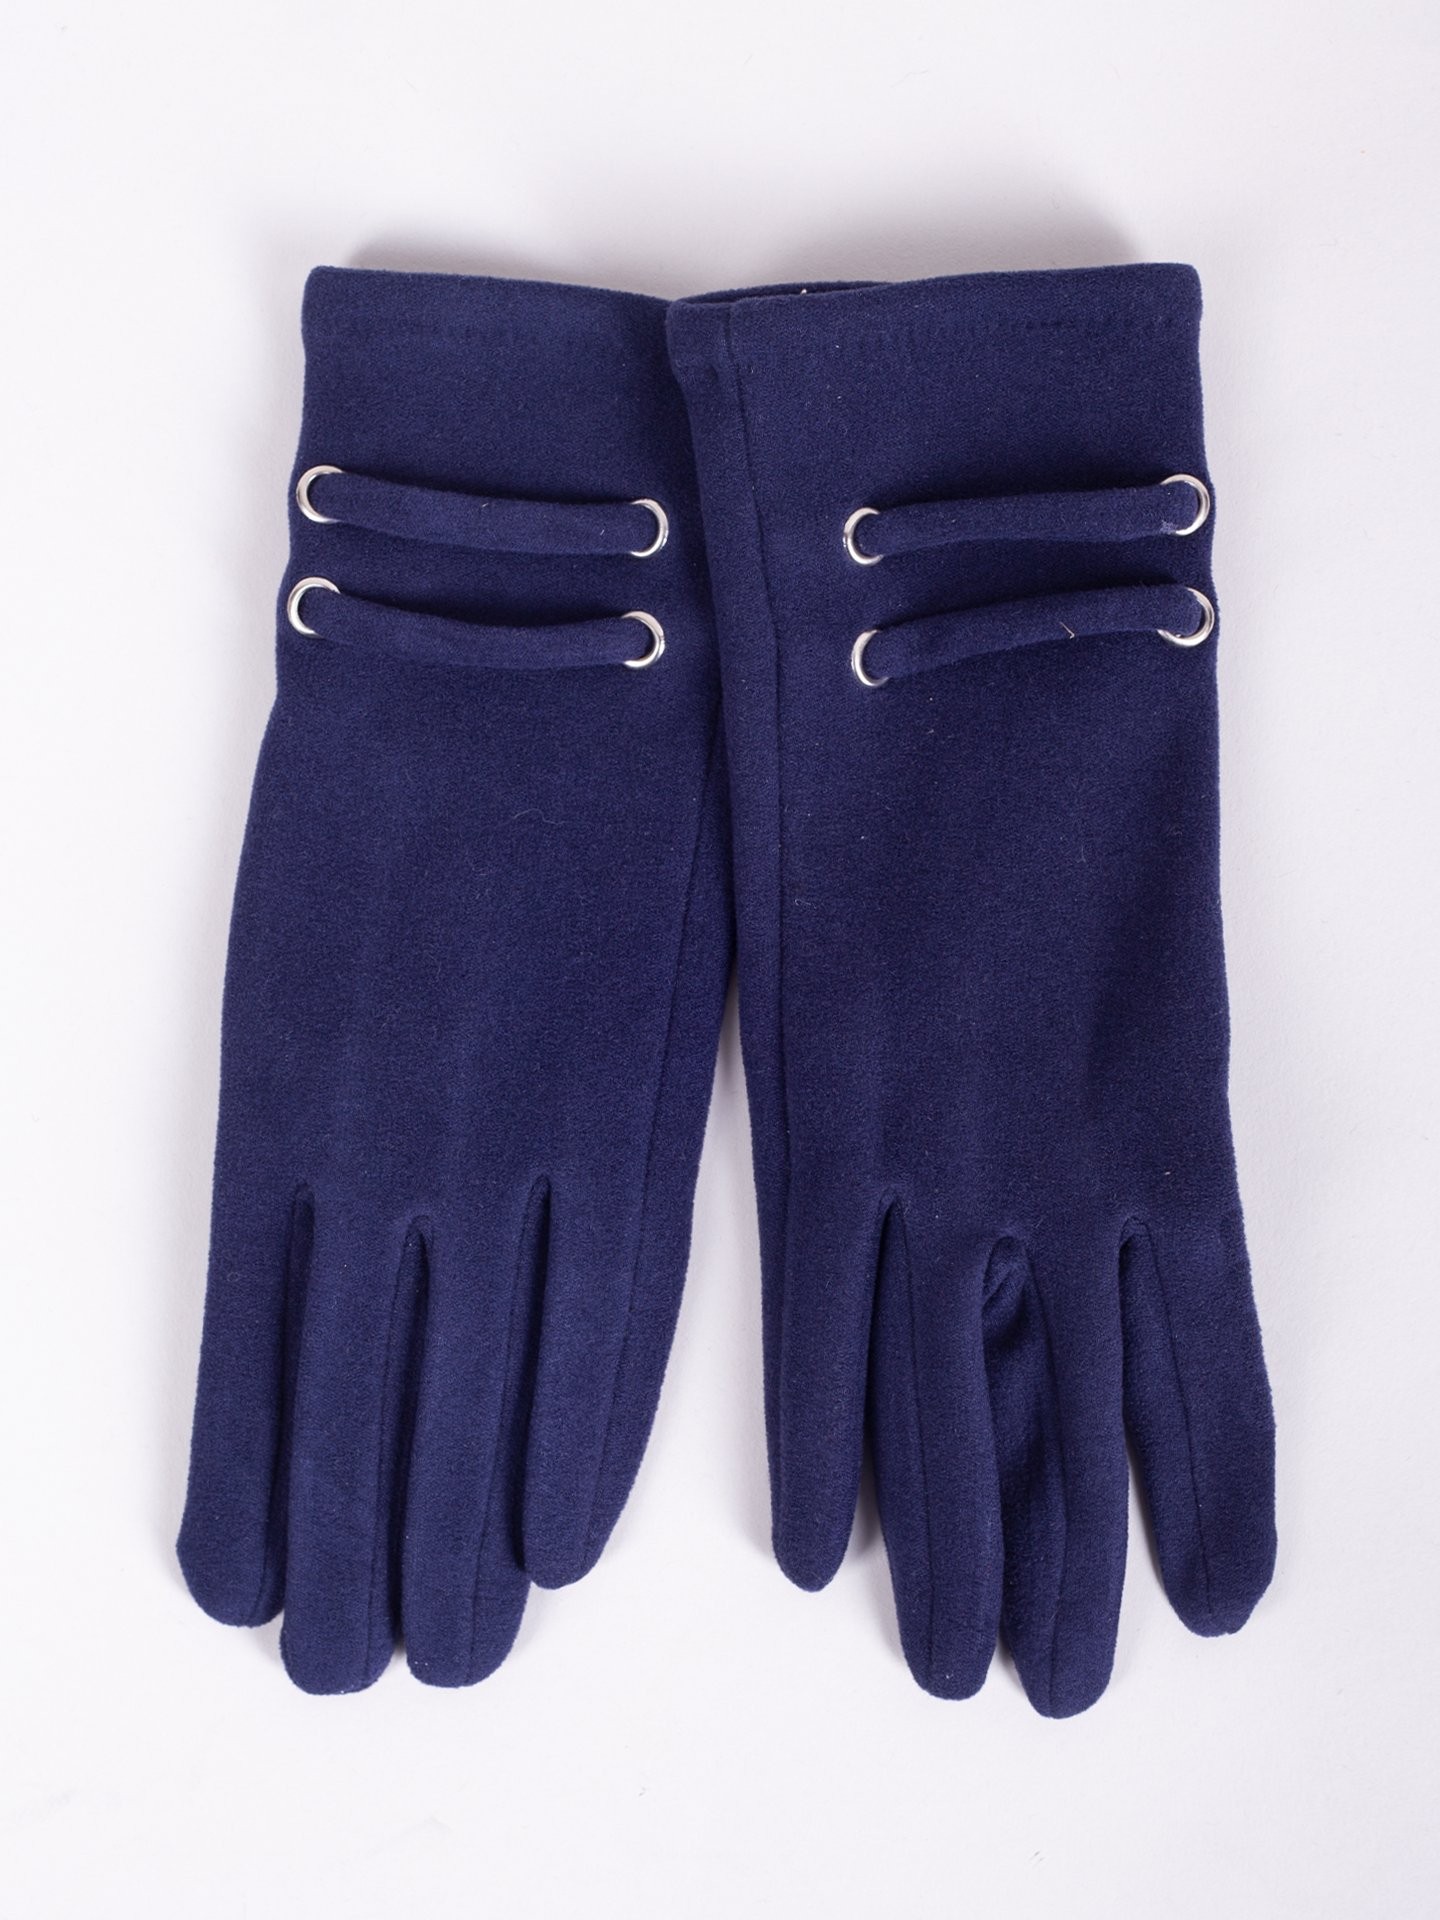 Yoclub Woman's Women's Gloves RES-0099K-195C Navy Blue